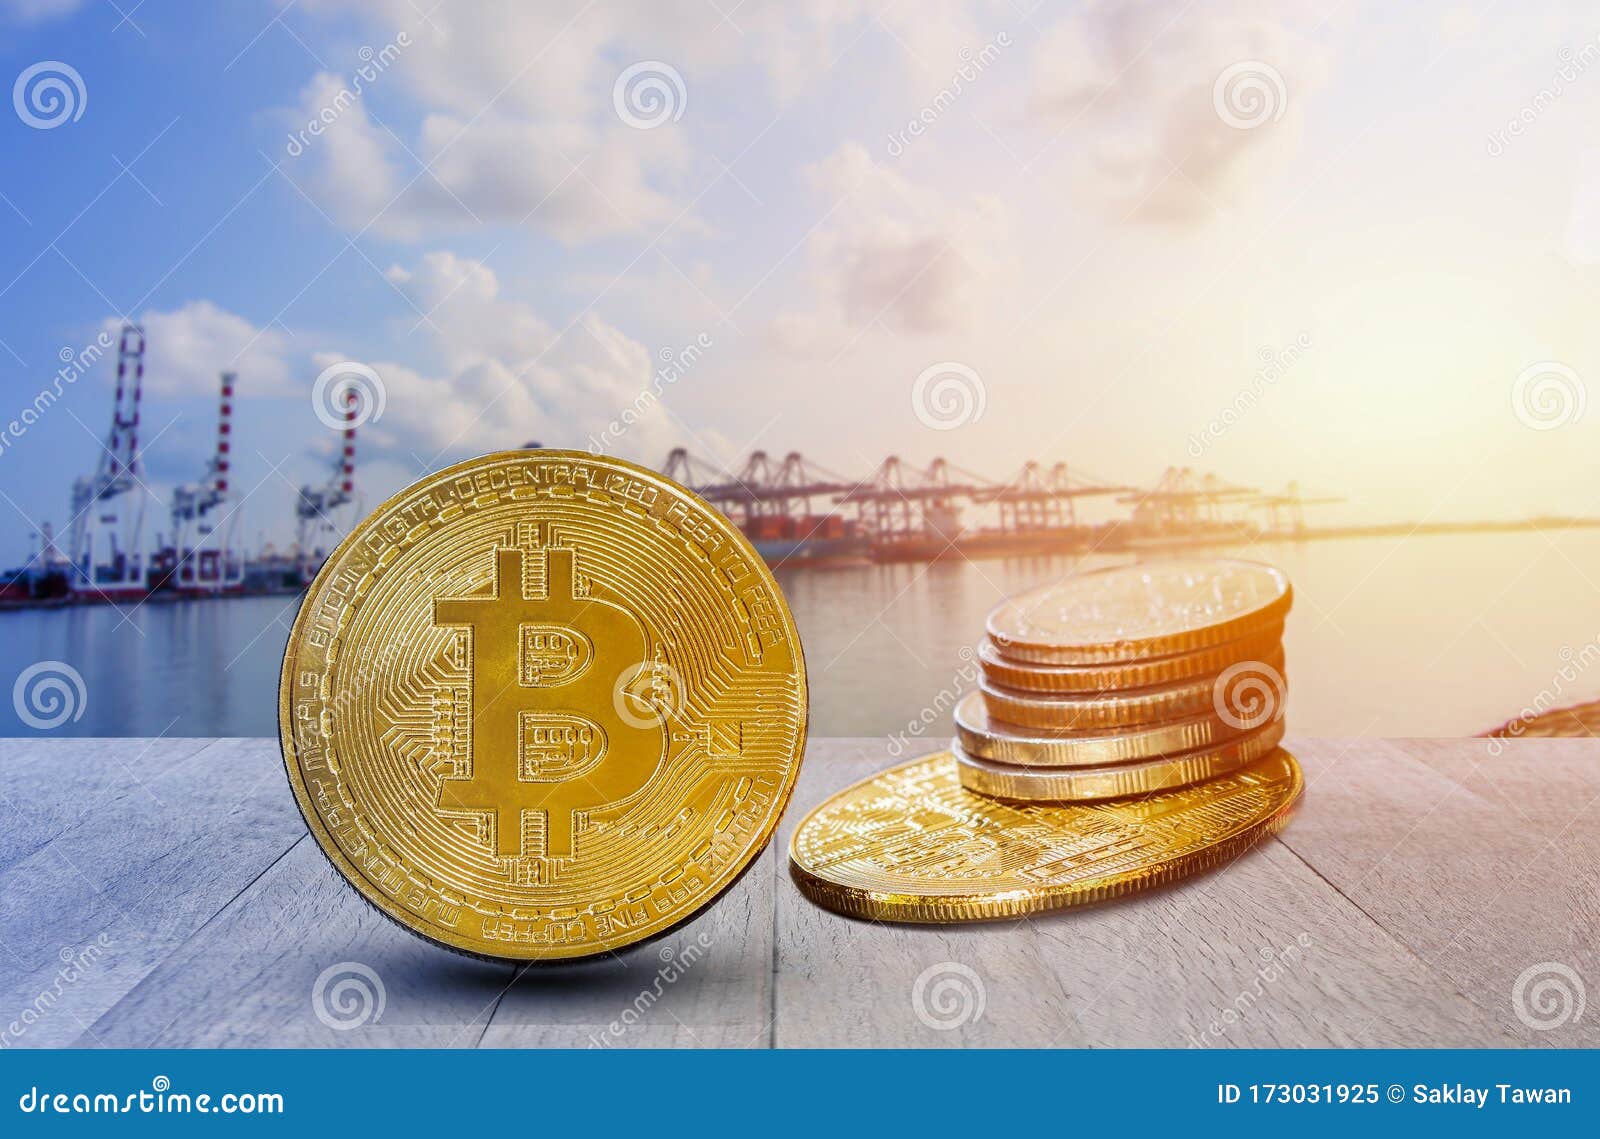 bitcoin port kaip prekiauti bitcoin iš coinbazės iki binanso